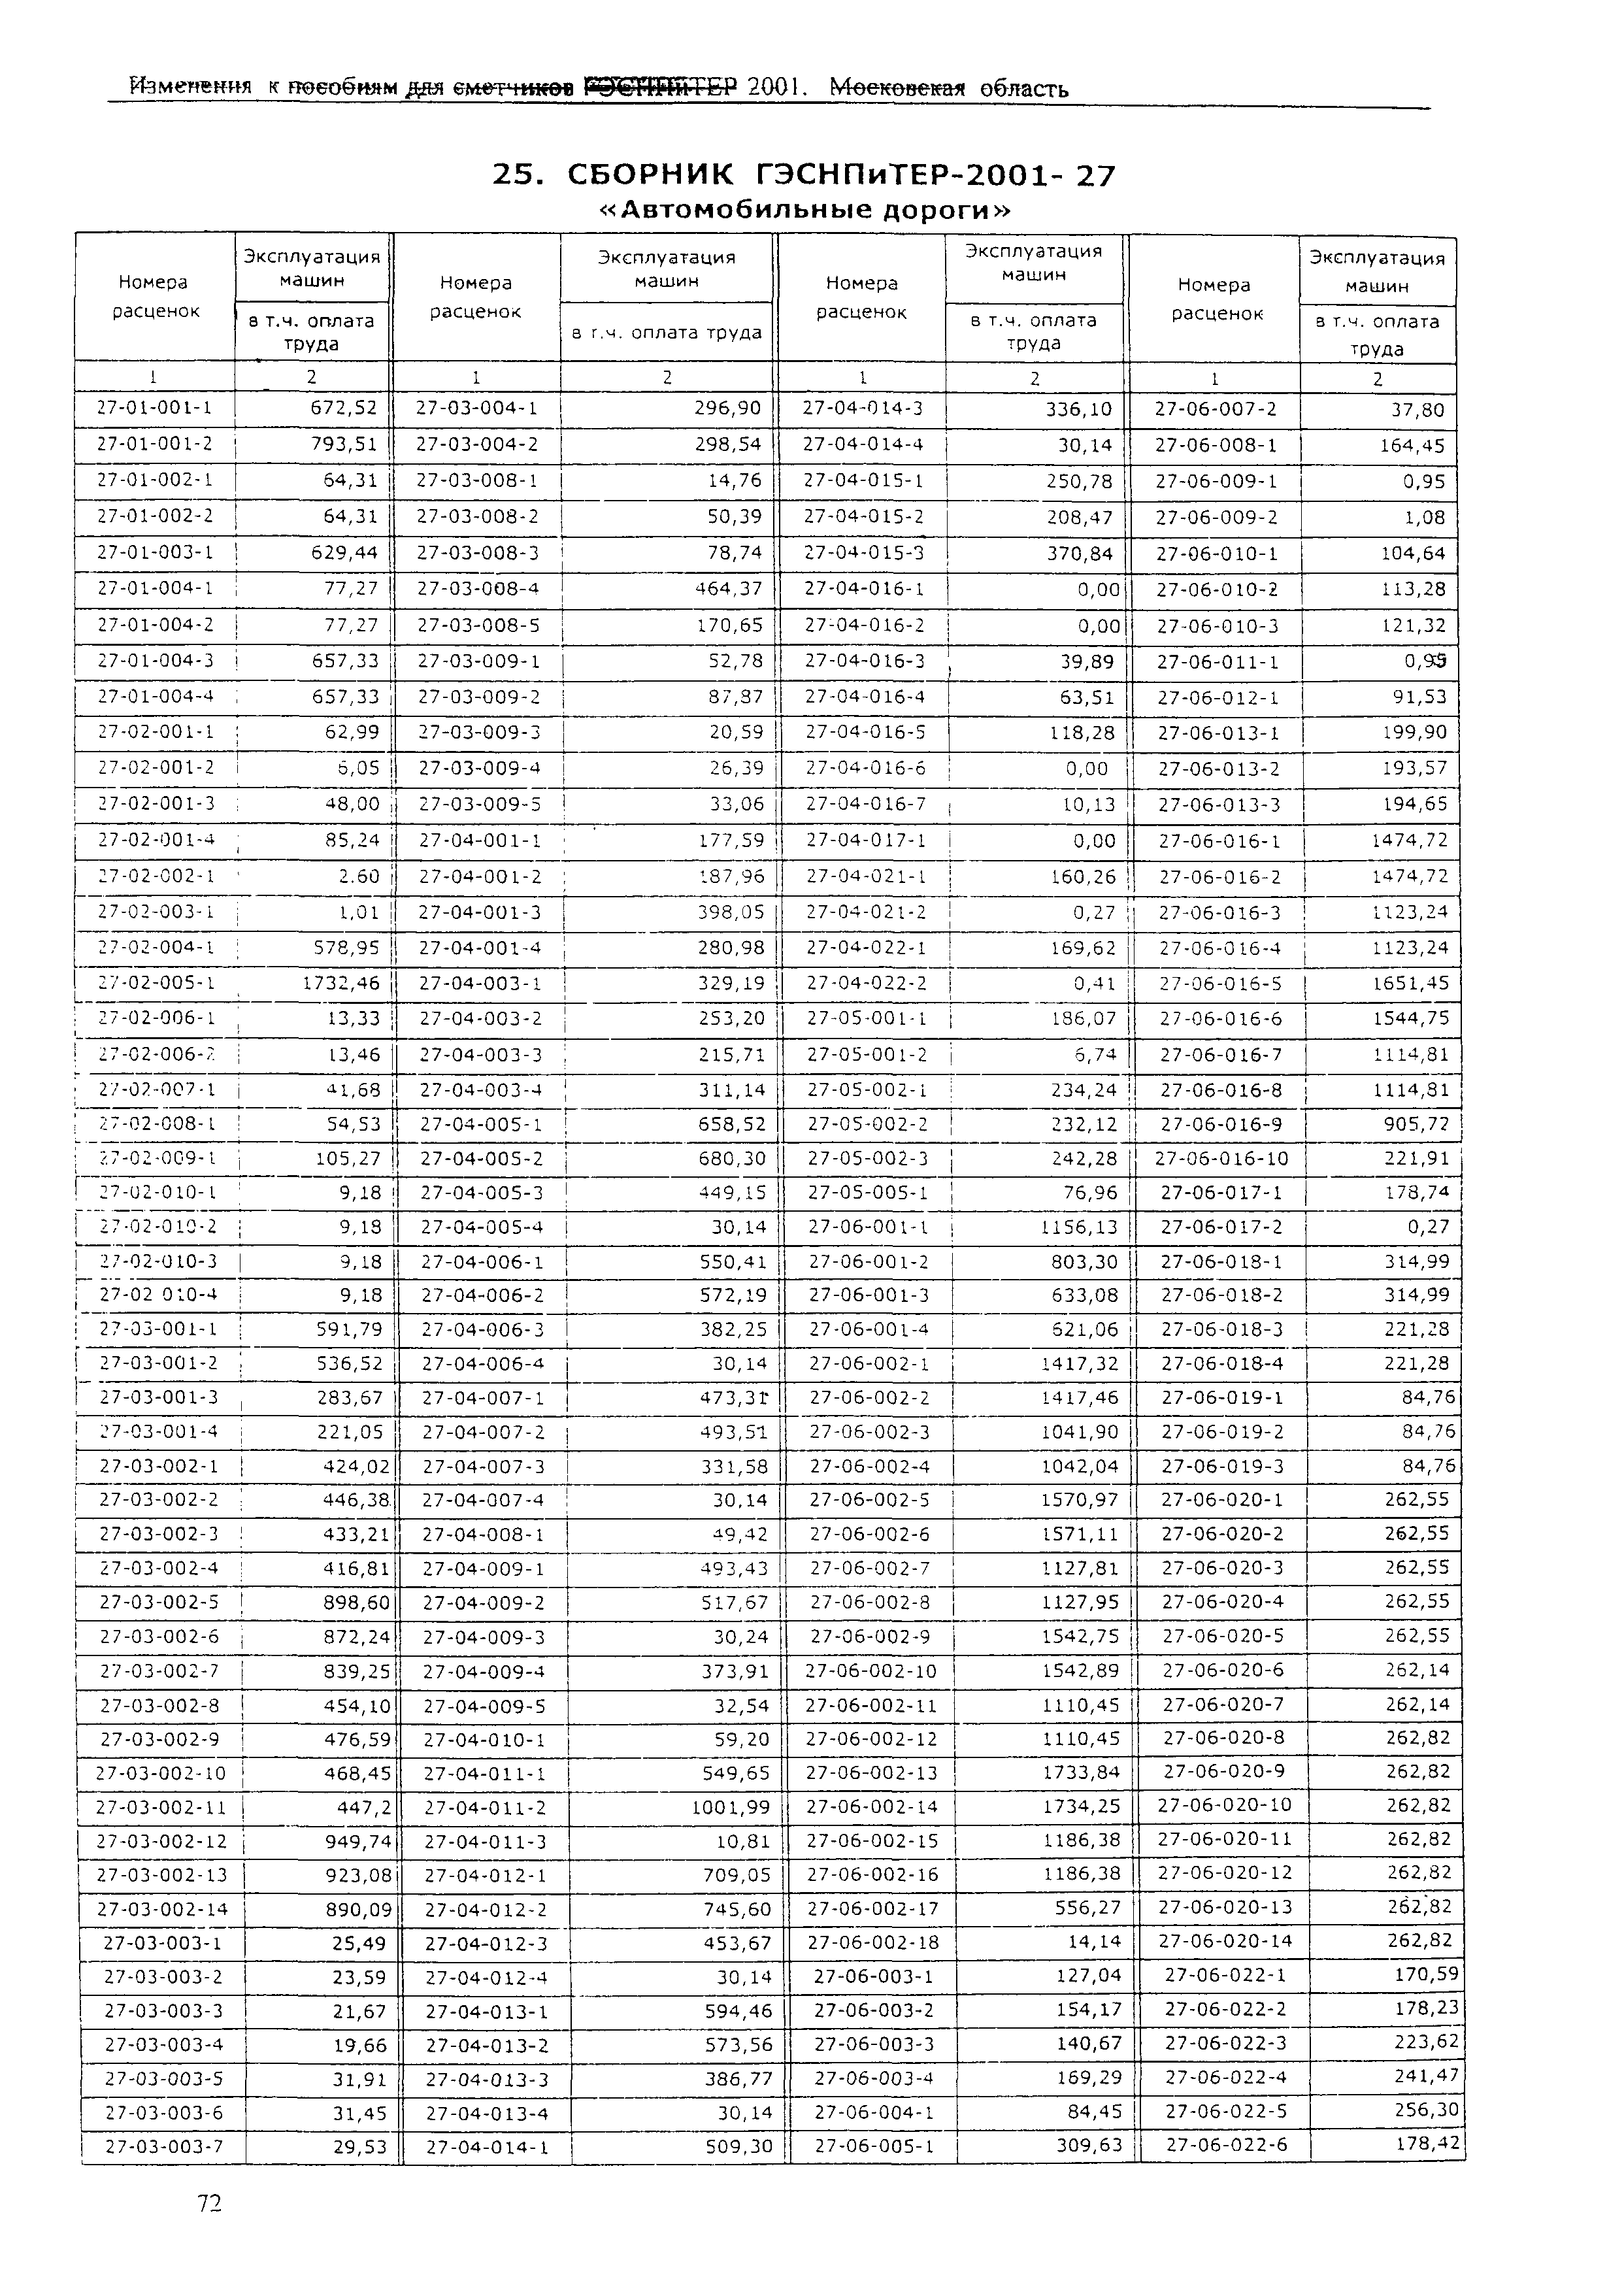 ГЭСНПиТЕР 2001-27 (I)